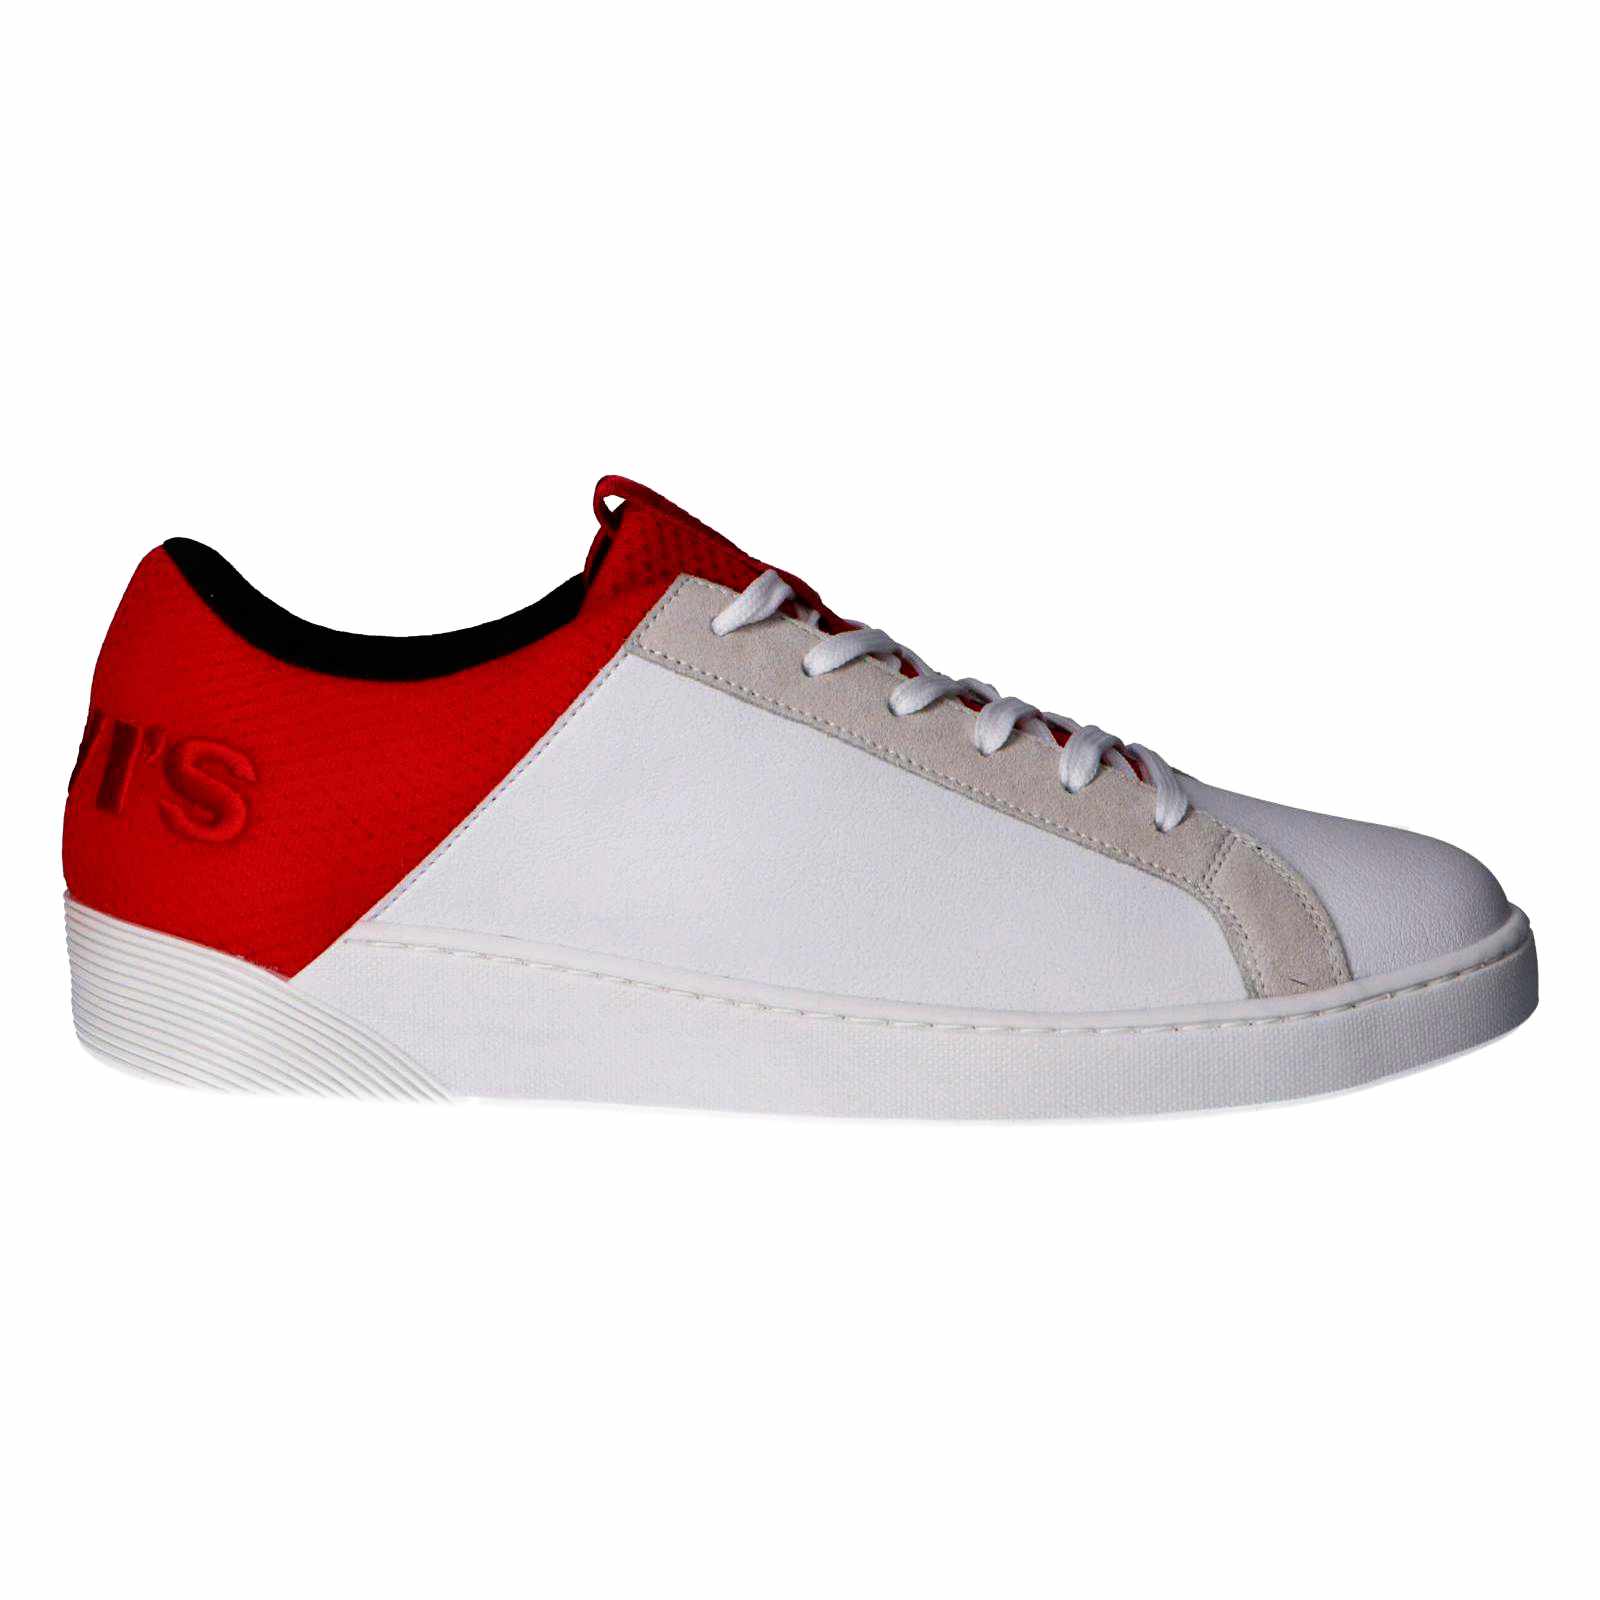 Sports shoes man LEVIS 231766 795 MULLET 87 REGULAR RED 5 multibella